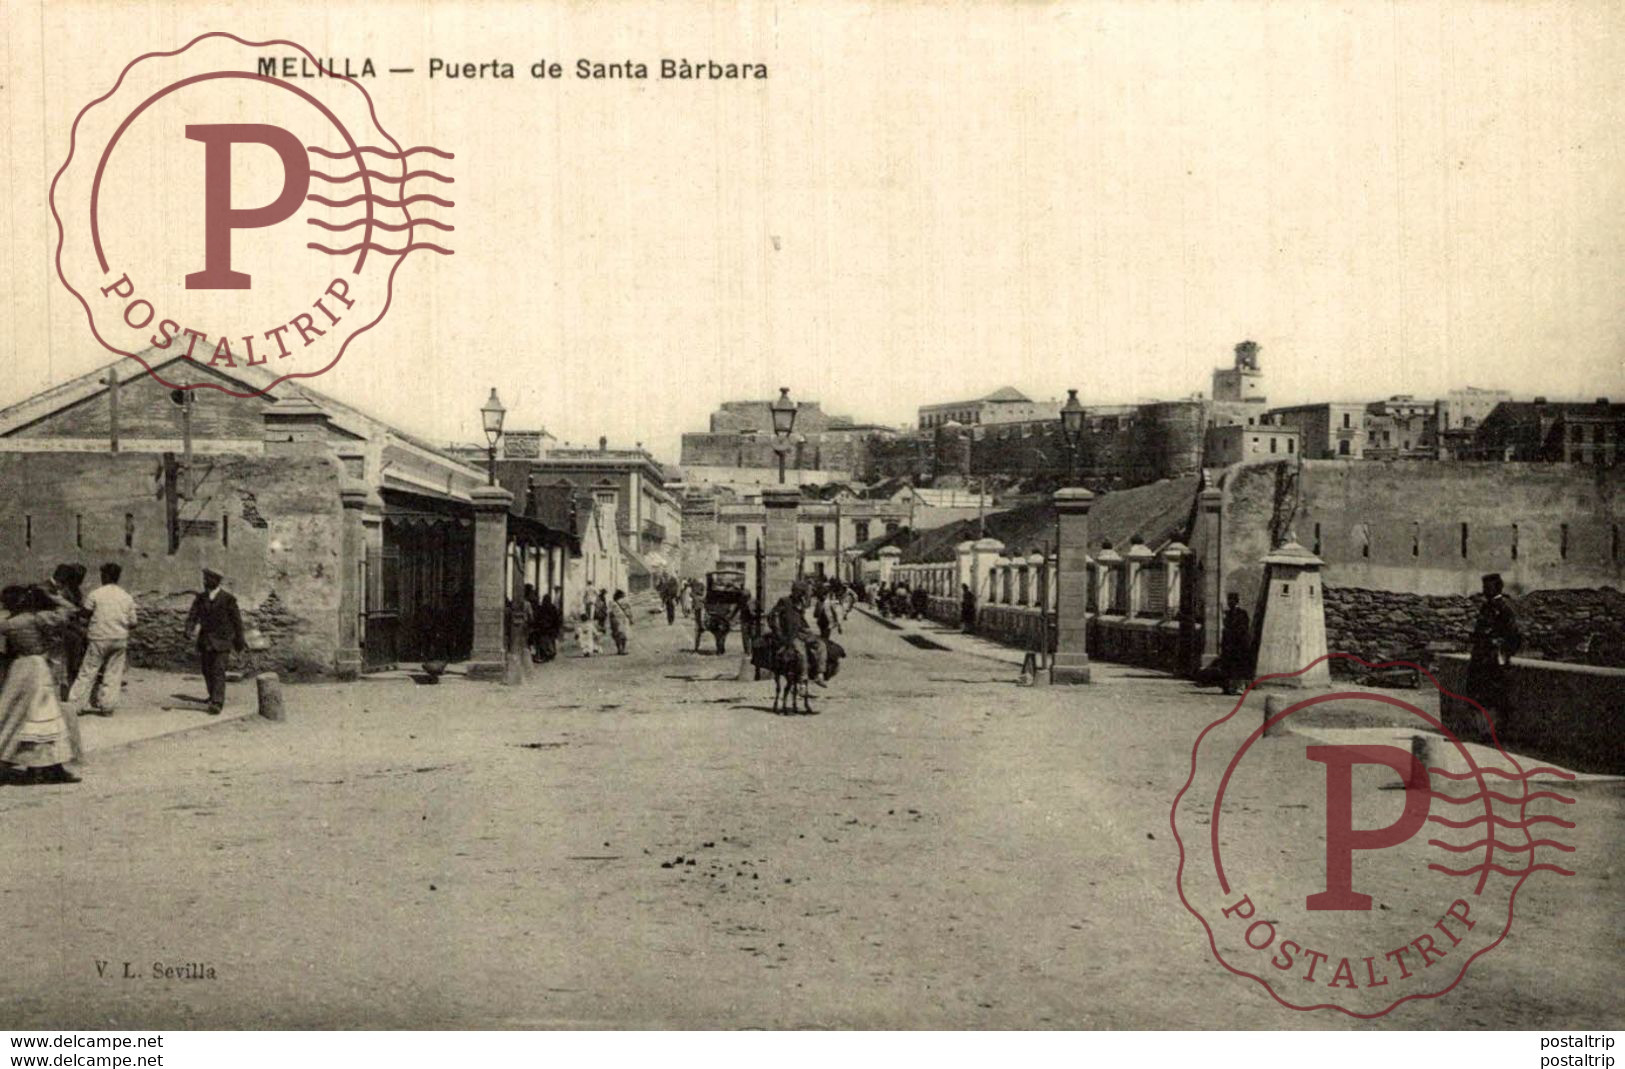 MELILLA PUERTA DE SANTA BARBARA - Melilla